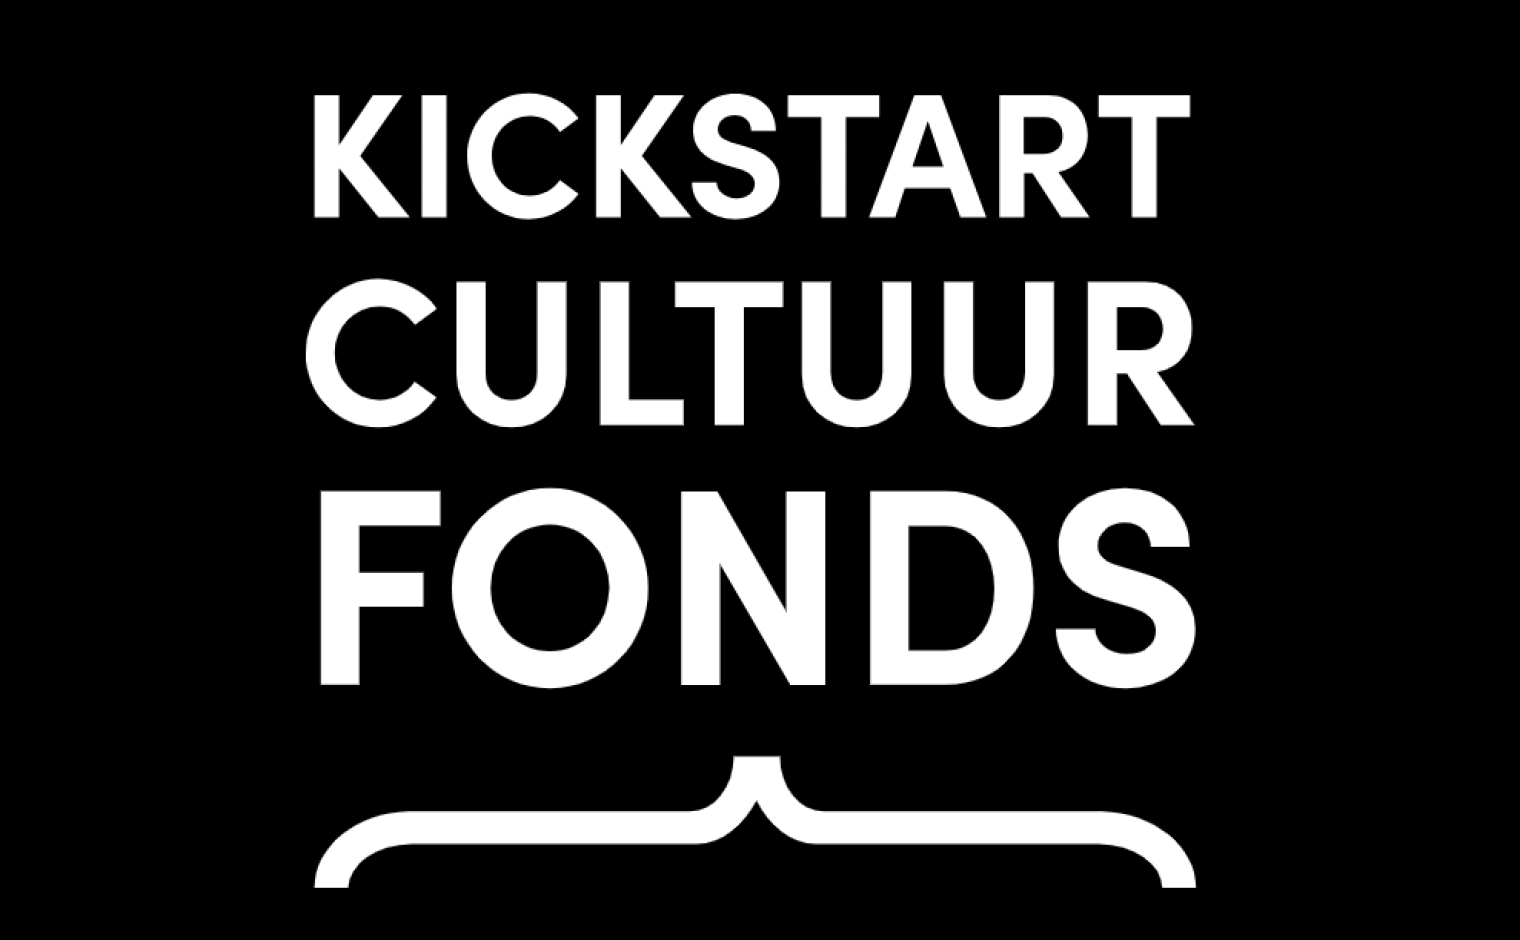 Logo Kickstart Cultuurfonds